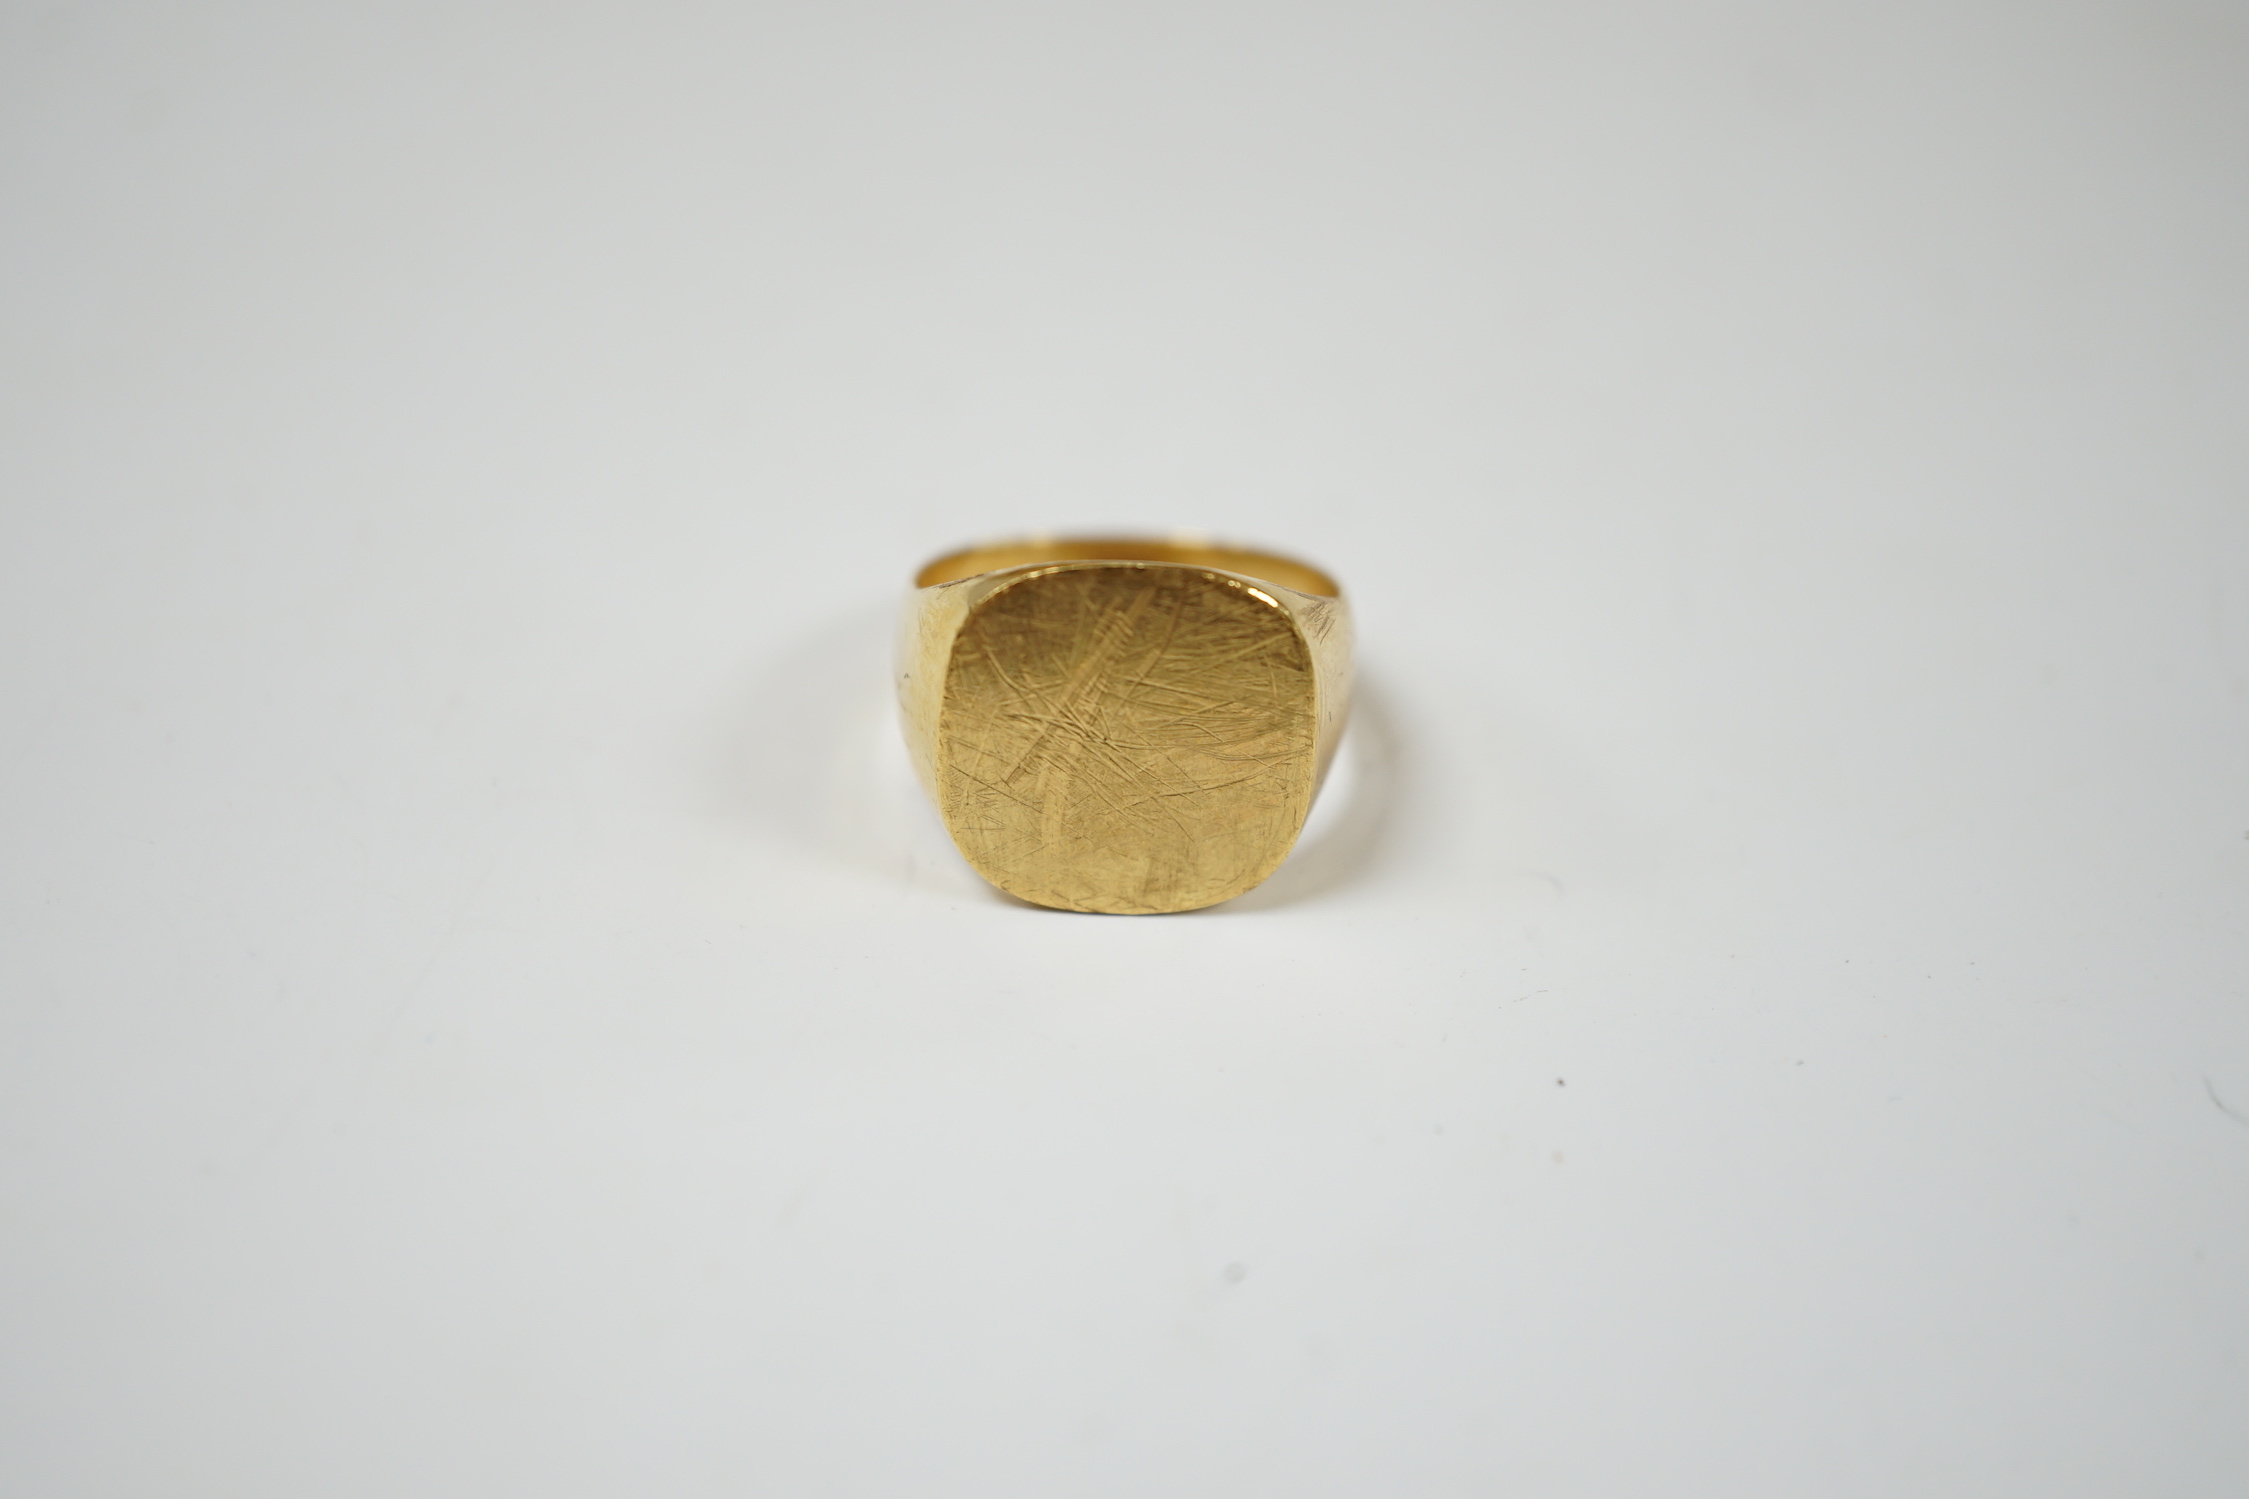 A 750 yellow metal signet ring, size N